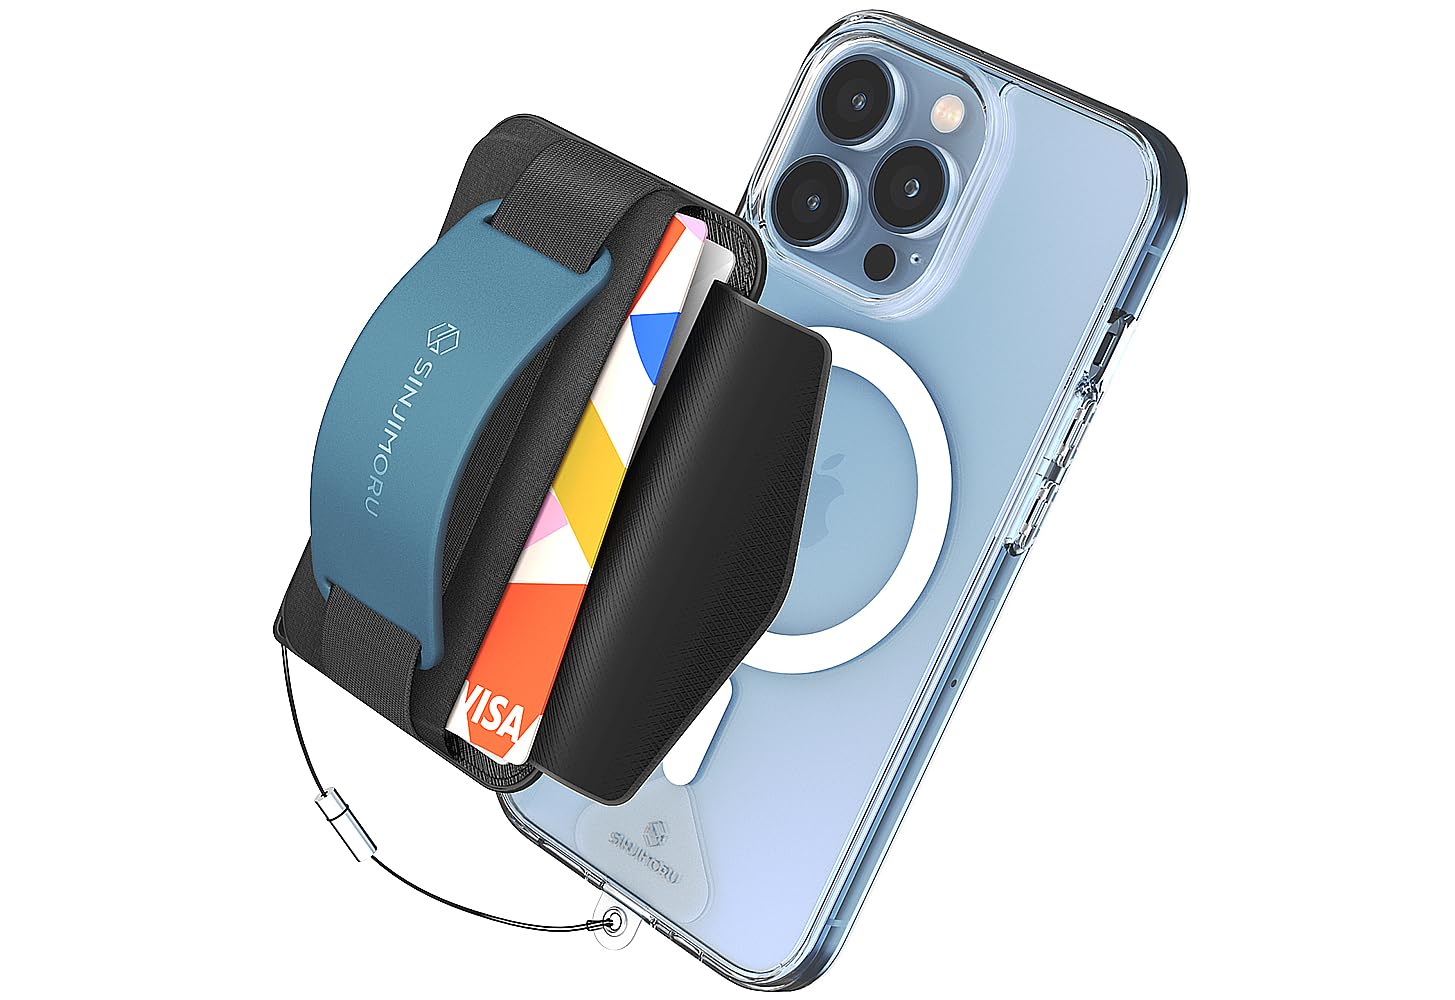 Sinjimoru Magsafe 対応 カードケース スマホスタンド、滑り止めシリコンパッド追加 3in1 iPhoneリングバンド カードホルダー 落下防止のタグパッチ付き Qi充電 対応 脱着簡単 片手操作便利 iPhone15 Plus Pro Pro Max iPhone14 13 12 シリーズ対応 マグセーフカードケー